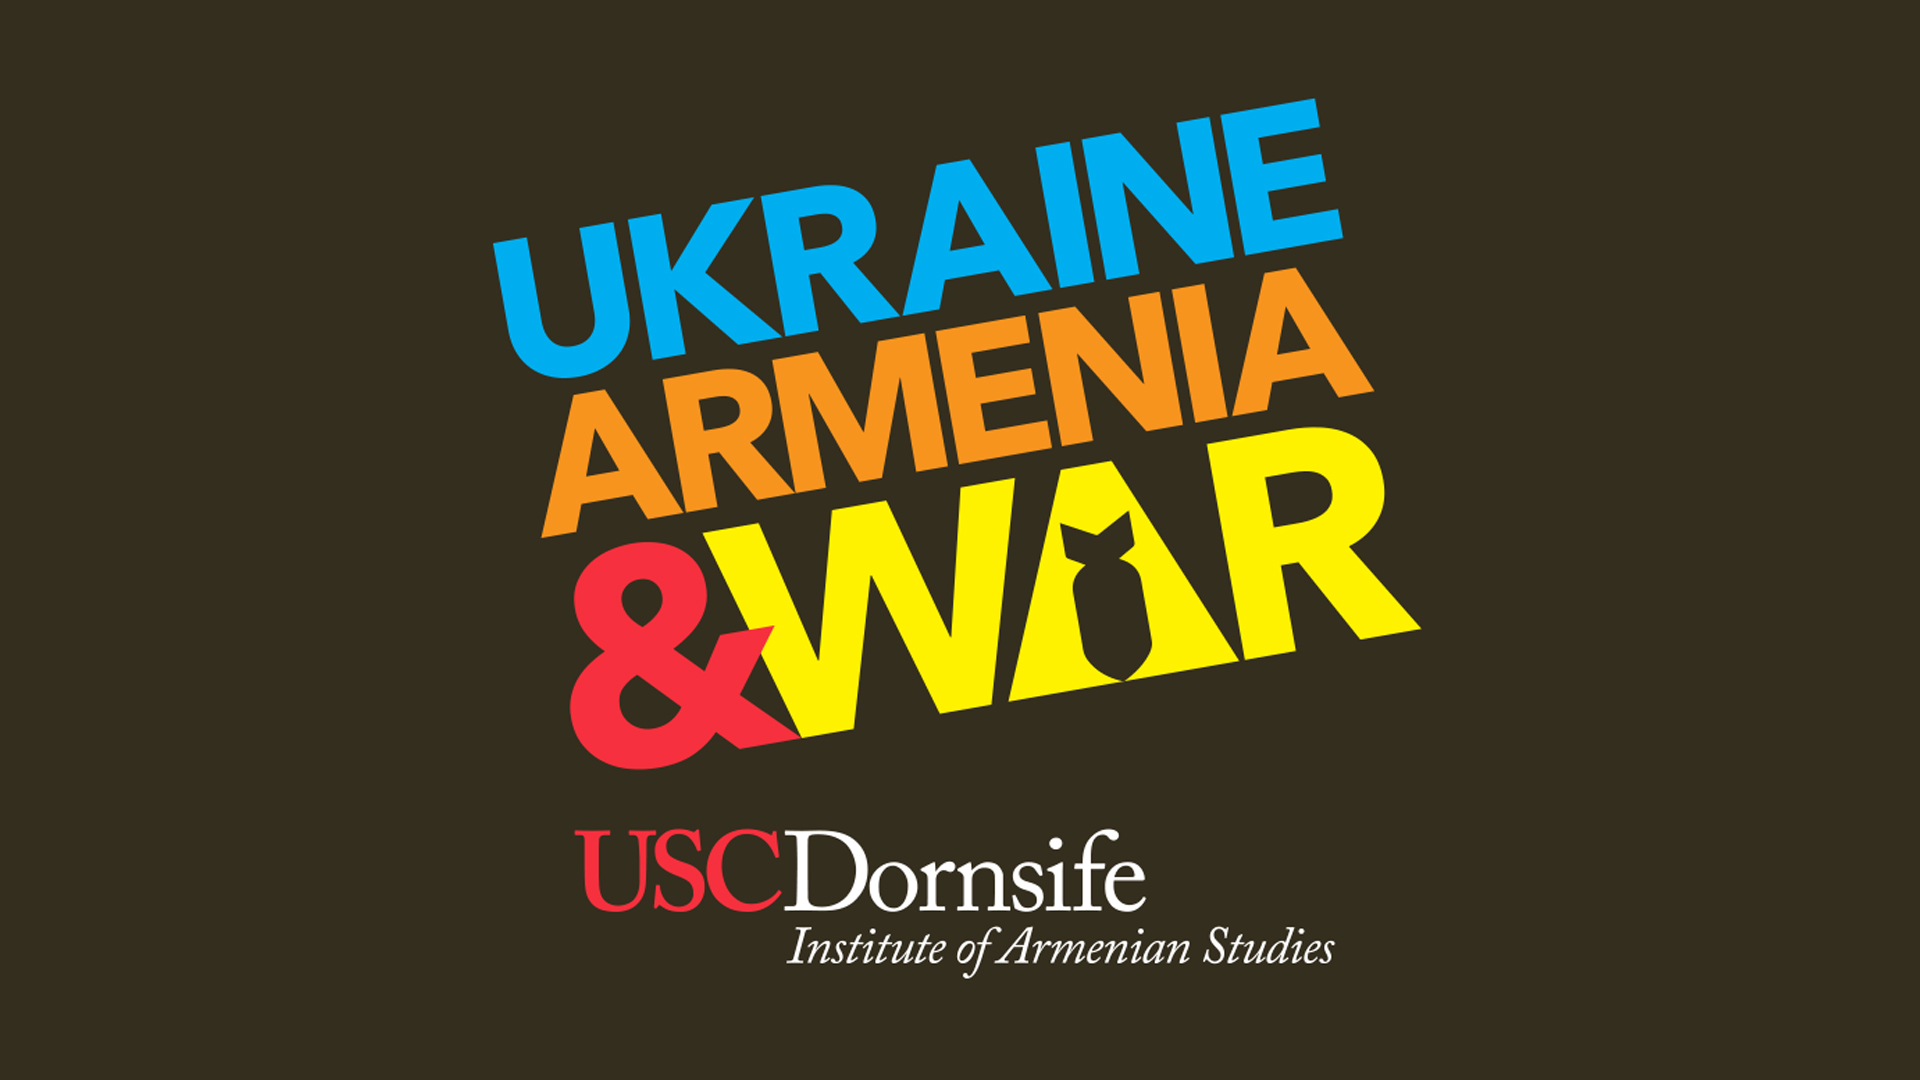 What is Seen in Armenia: Ukraine, Armenia & War